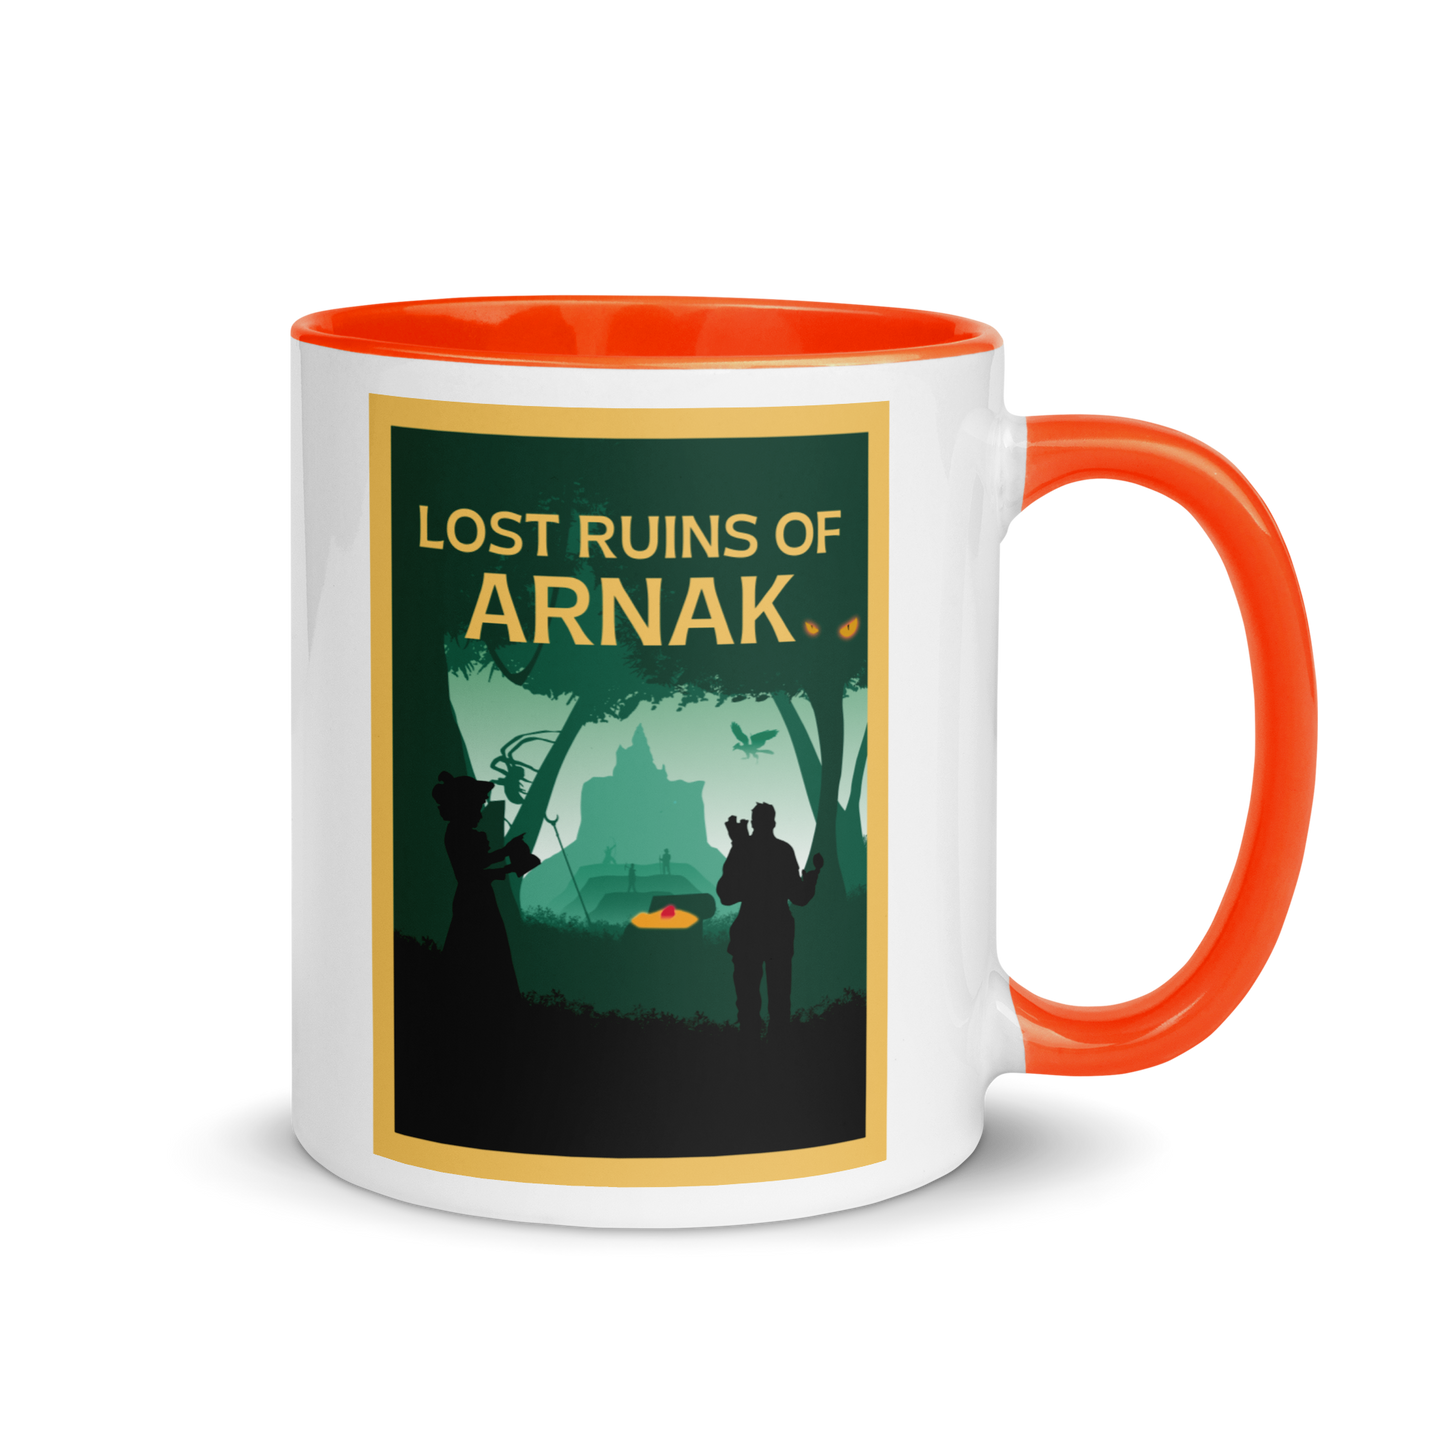 Lost Ruins of Arnak Temple Minimalist Board Game Mug